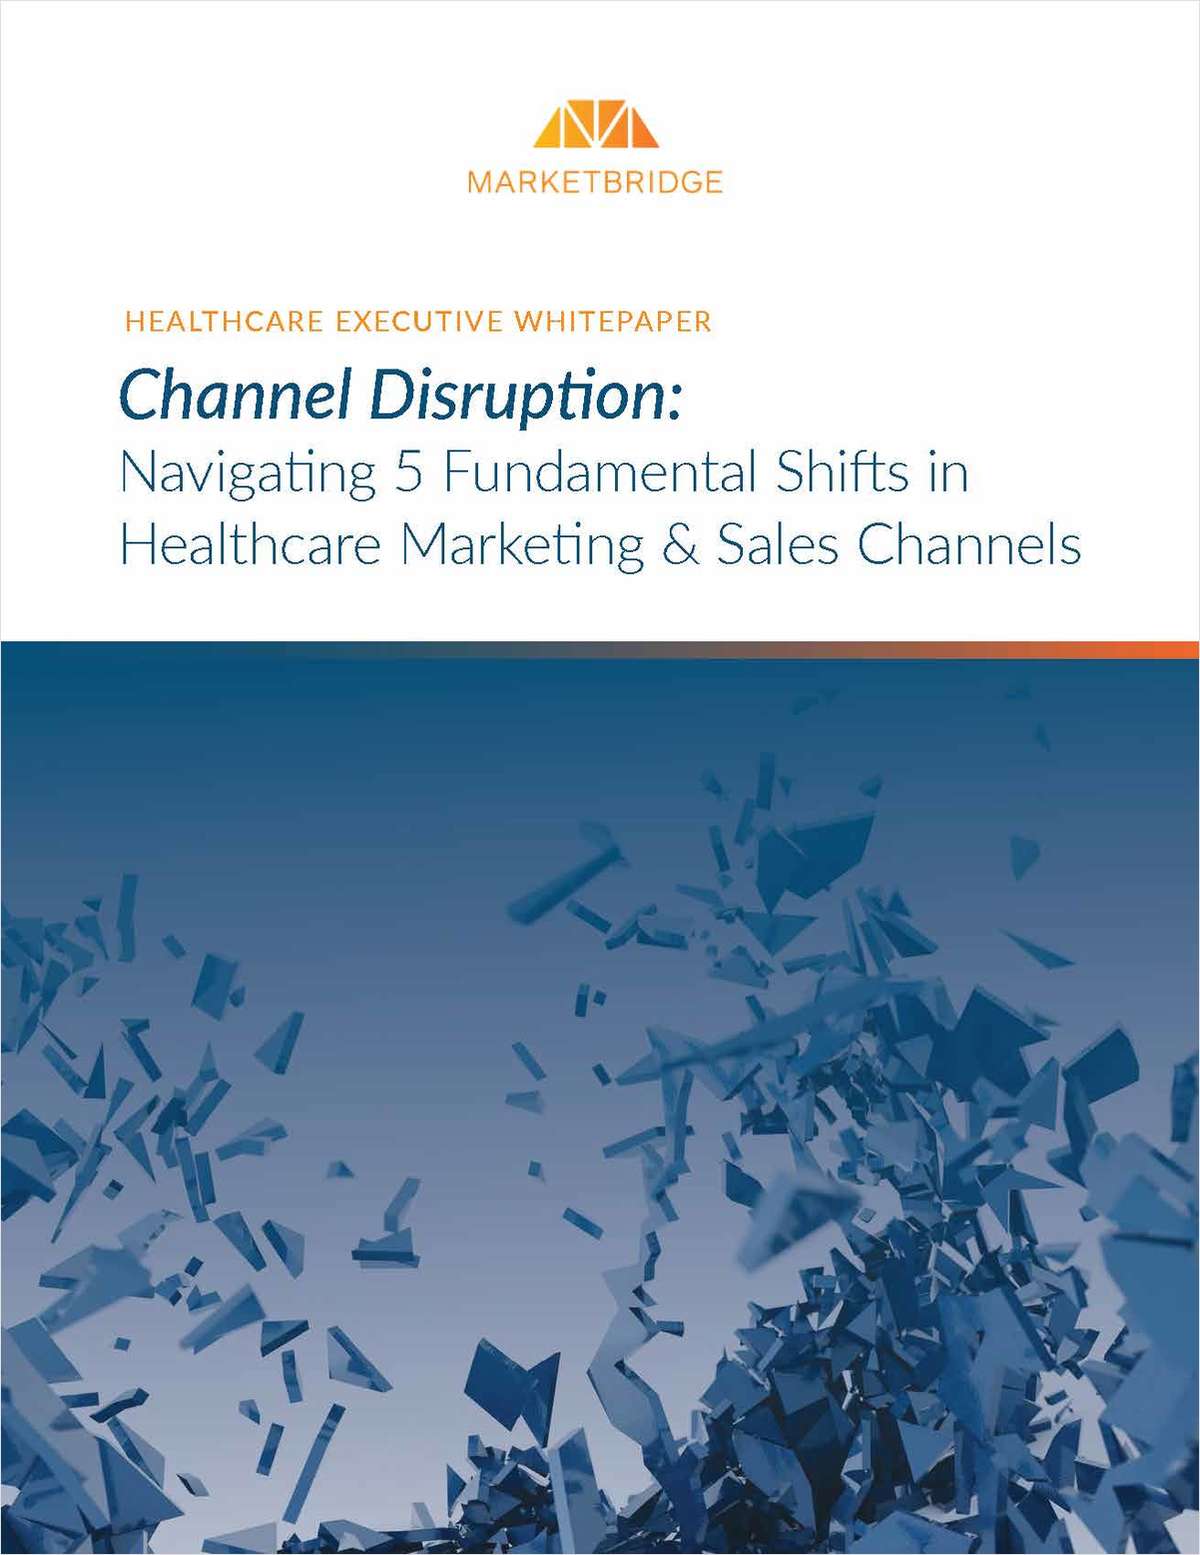 Navigating 5 Fundamental Shifts in Healthcare Marketing & Sales Channels